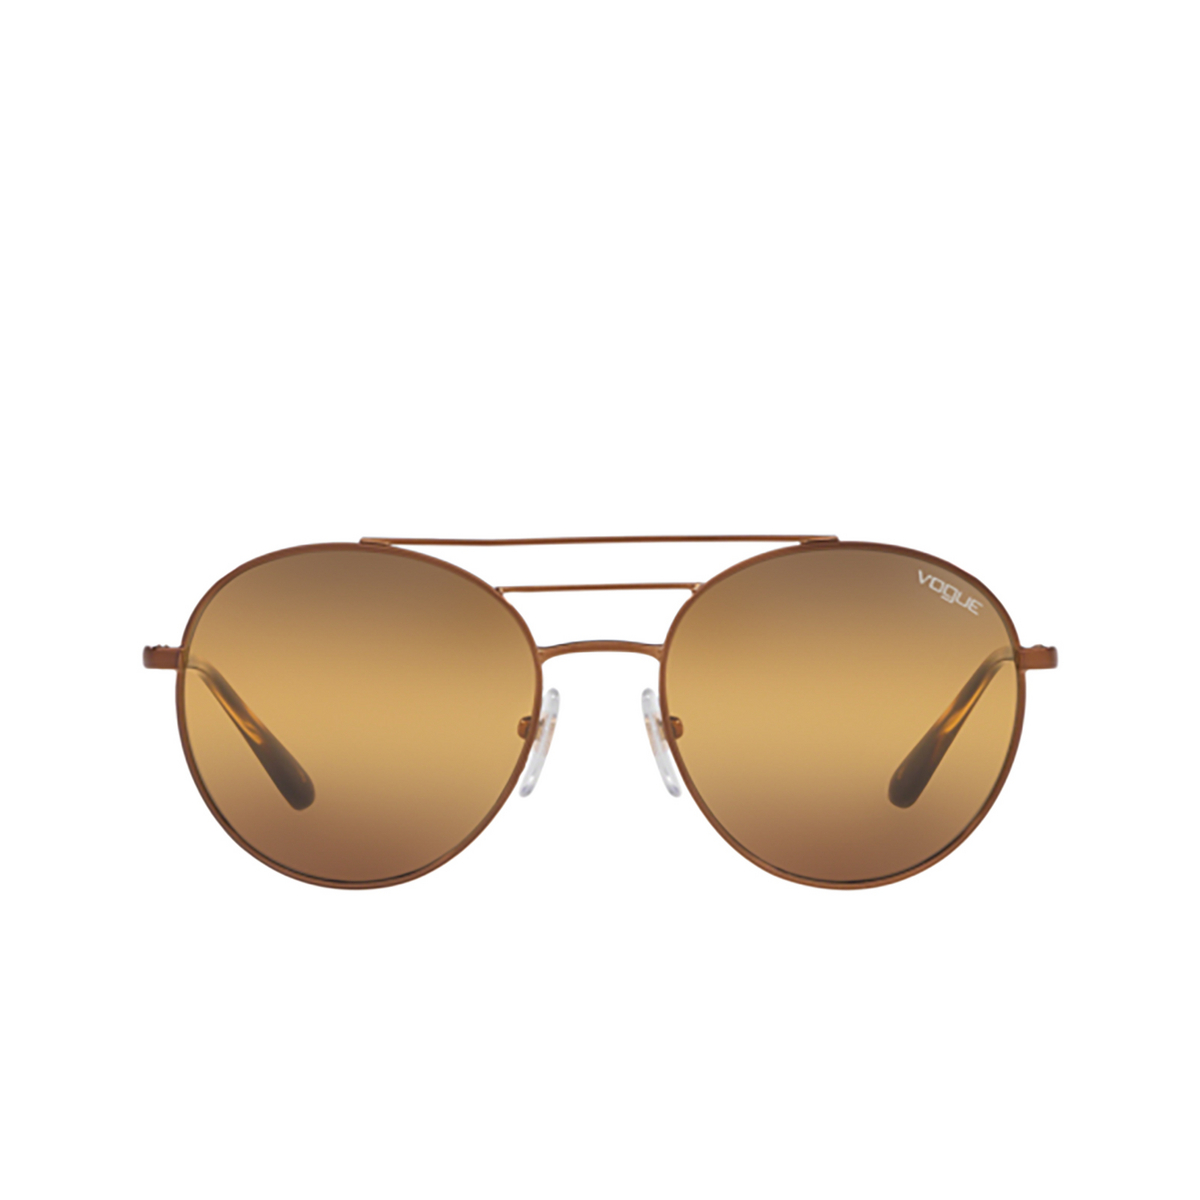 Vogue® Round Sunglasses: VO4117S color Copper 50740L - front view.